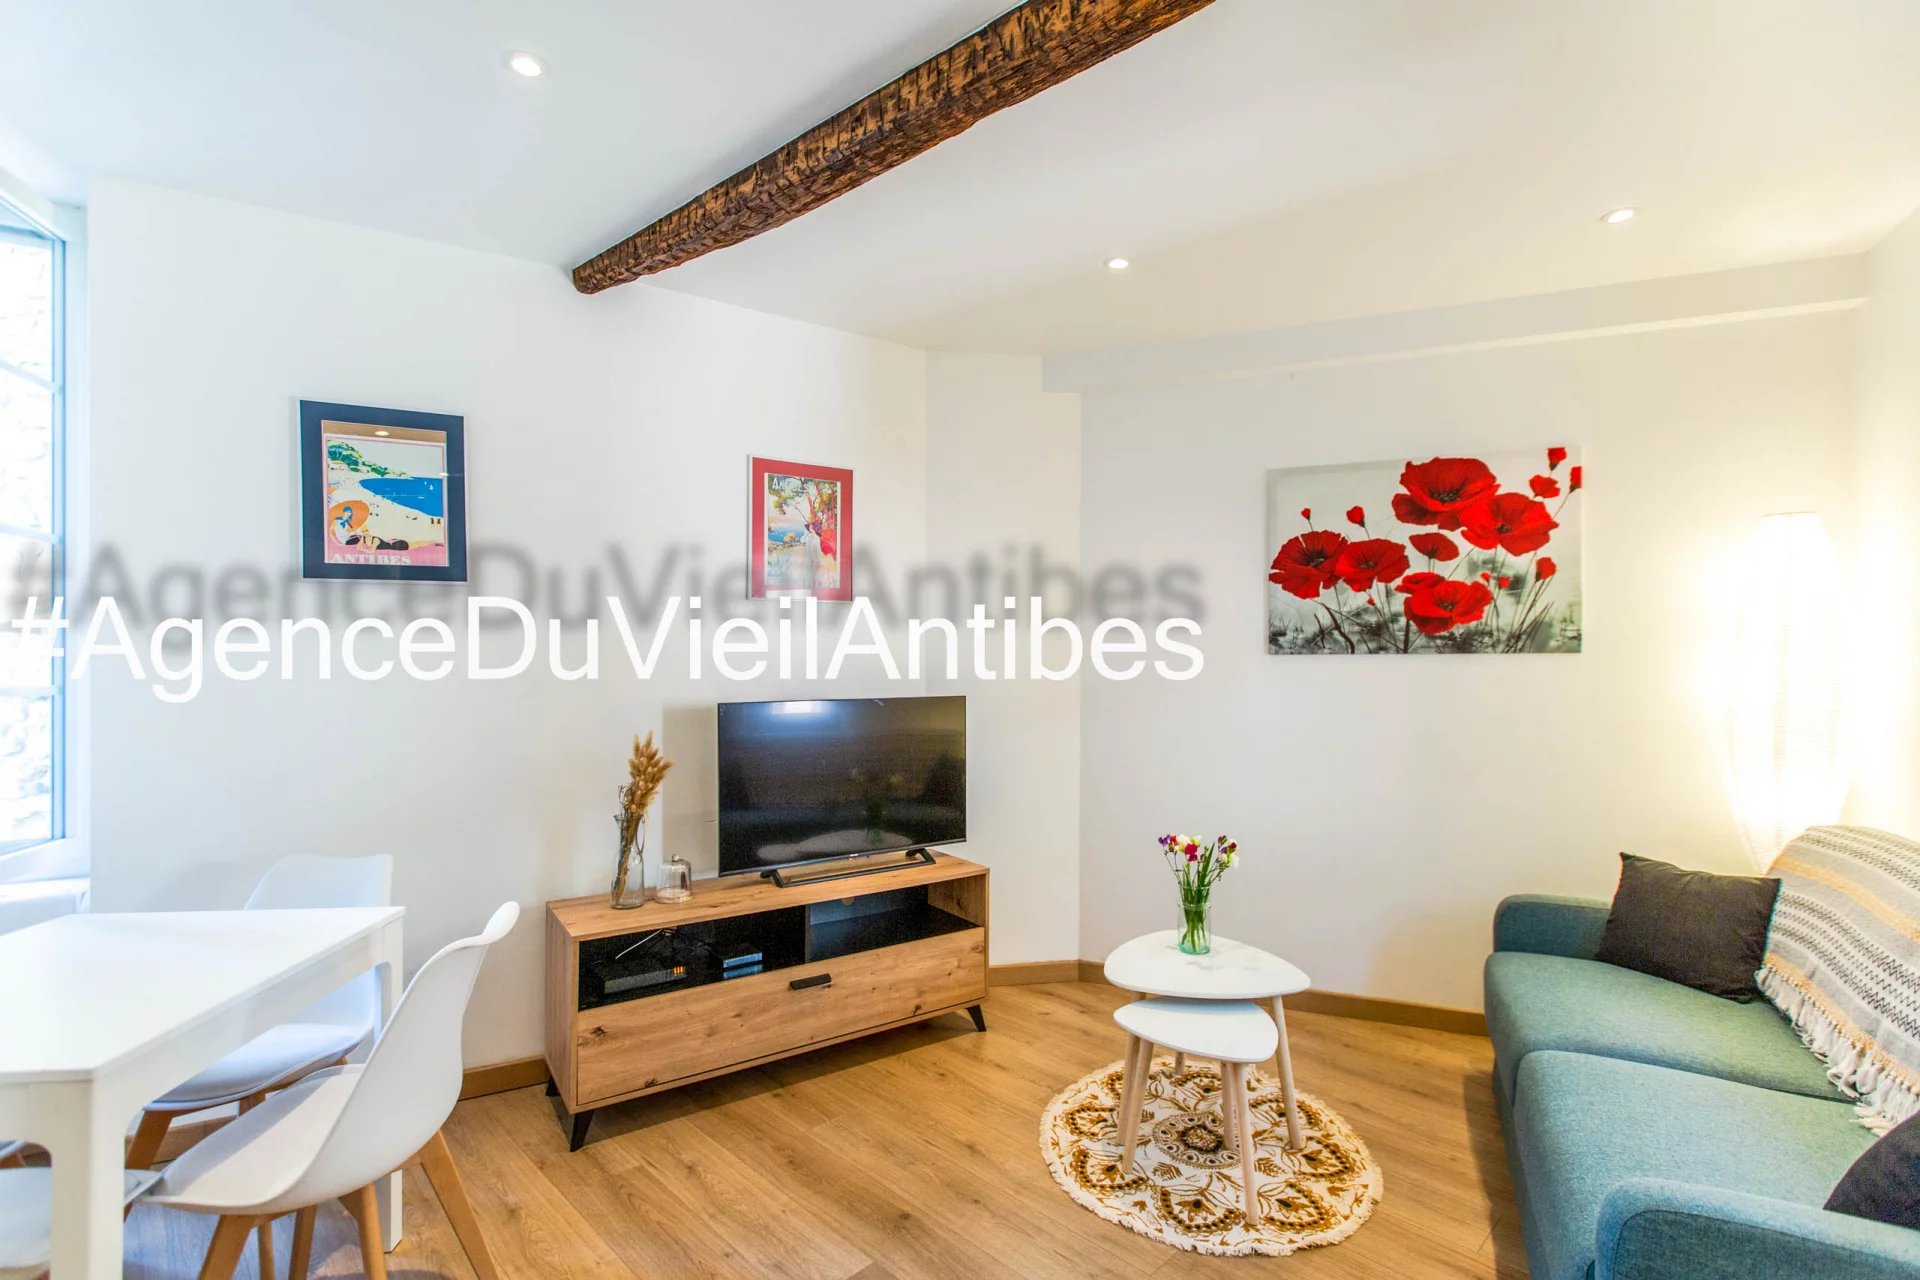 VIEIL ANTIBES - 2p de 33 m² loué meublé de Septembre a Juin